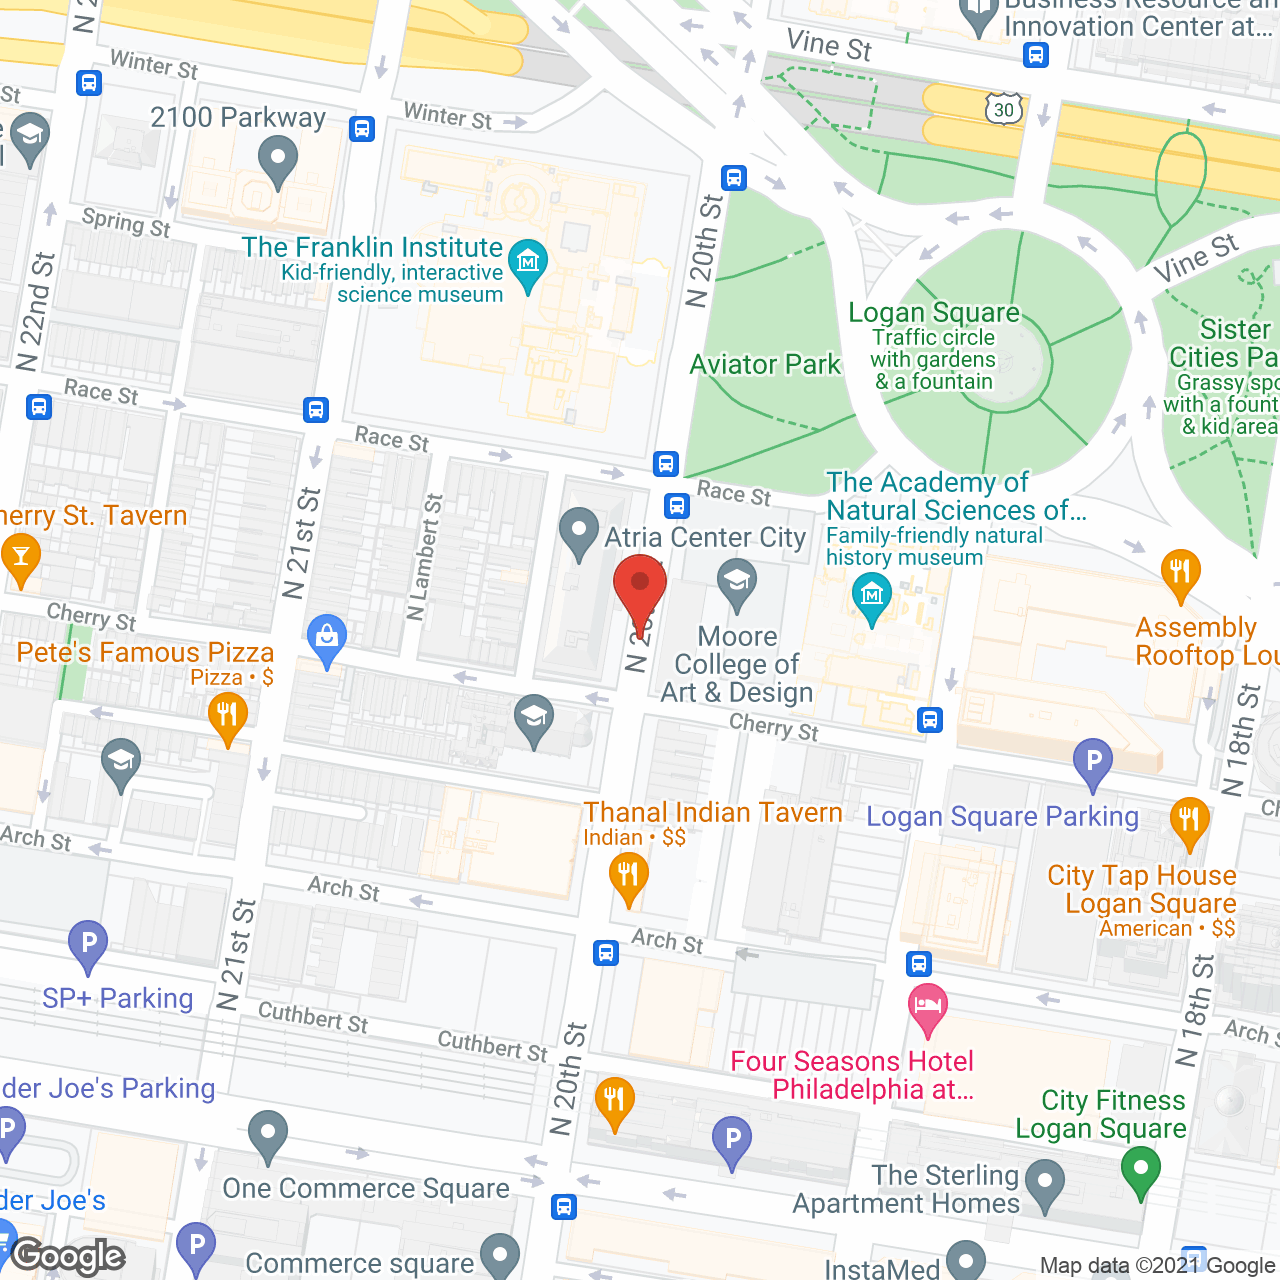 Atria Center City in google map